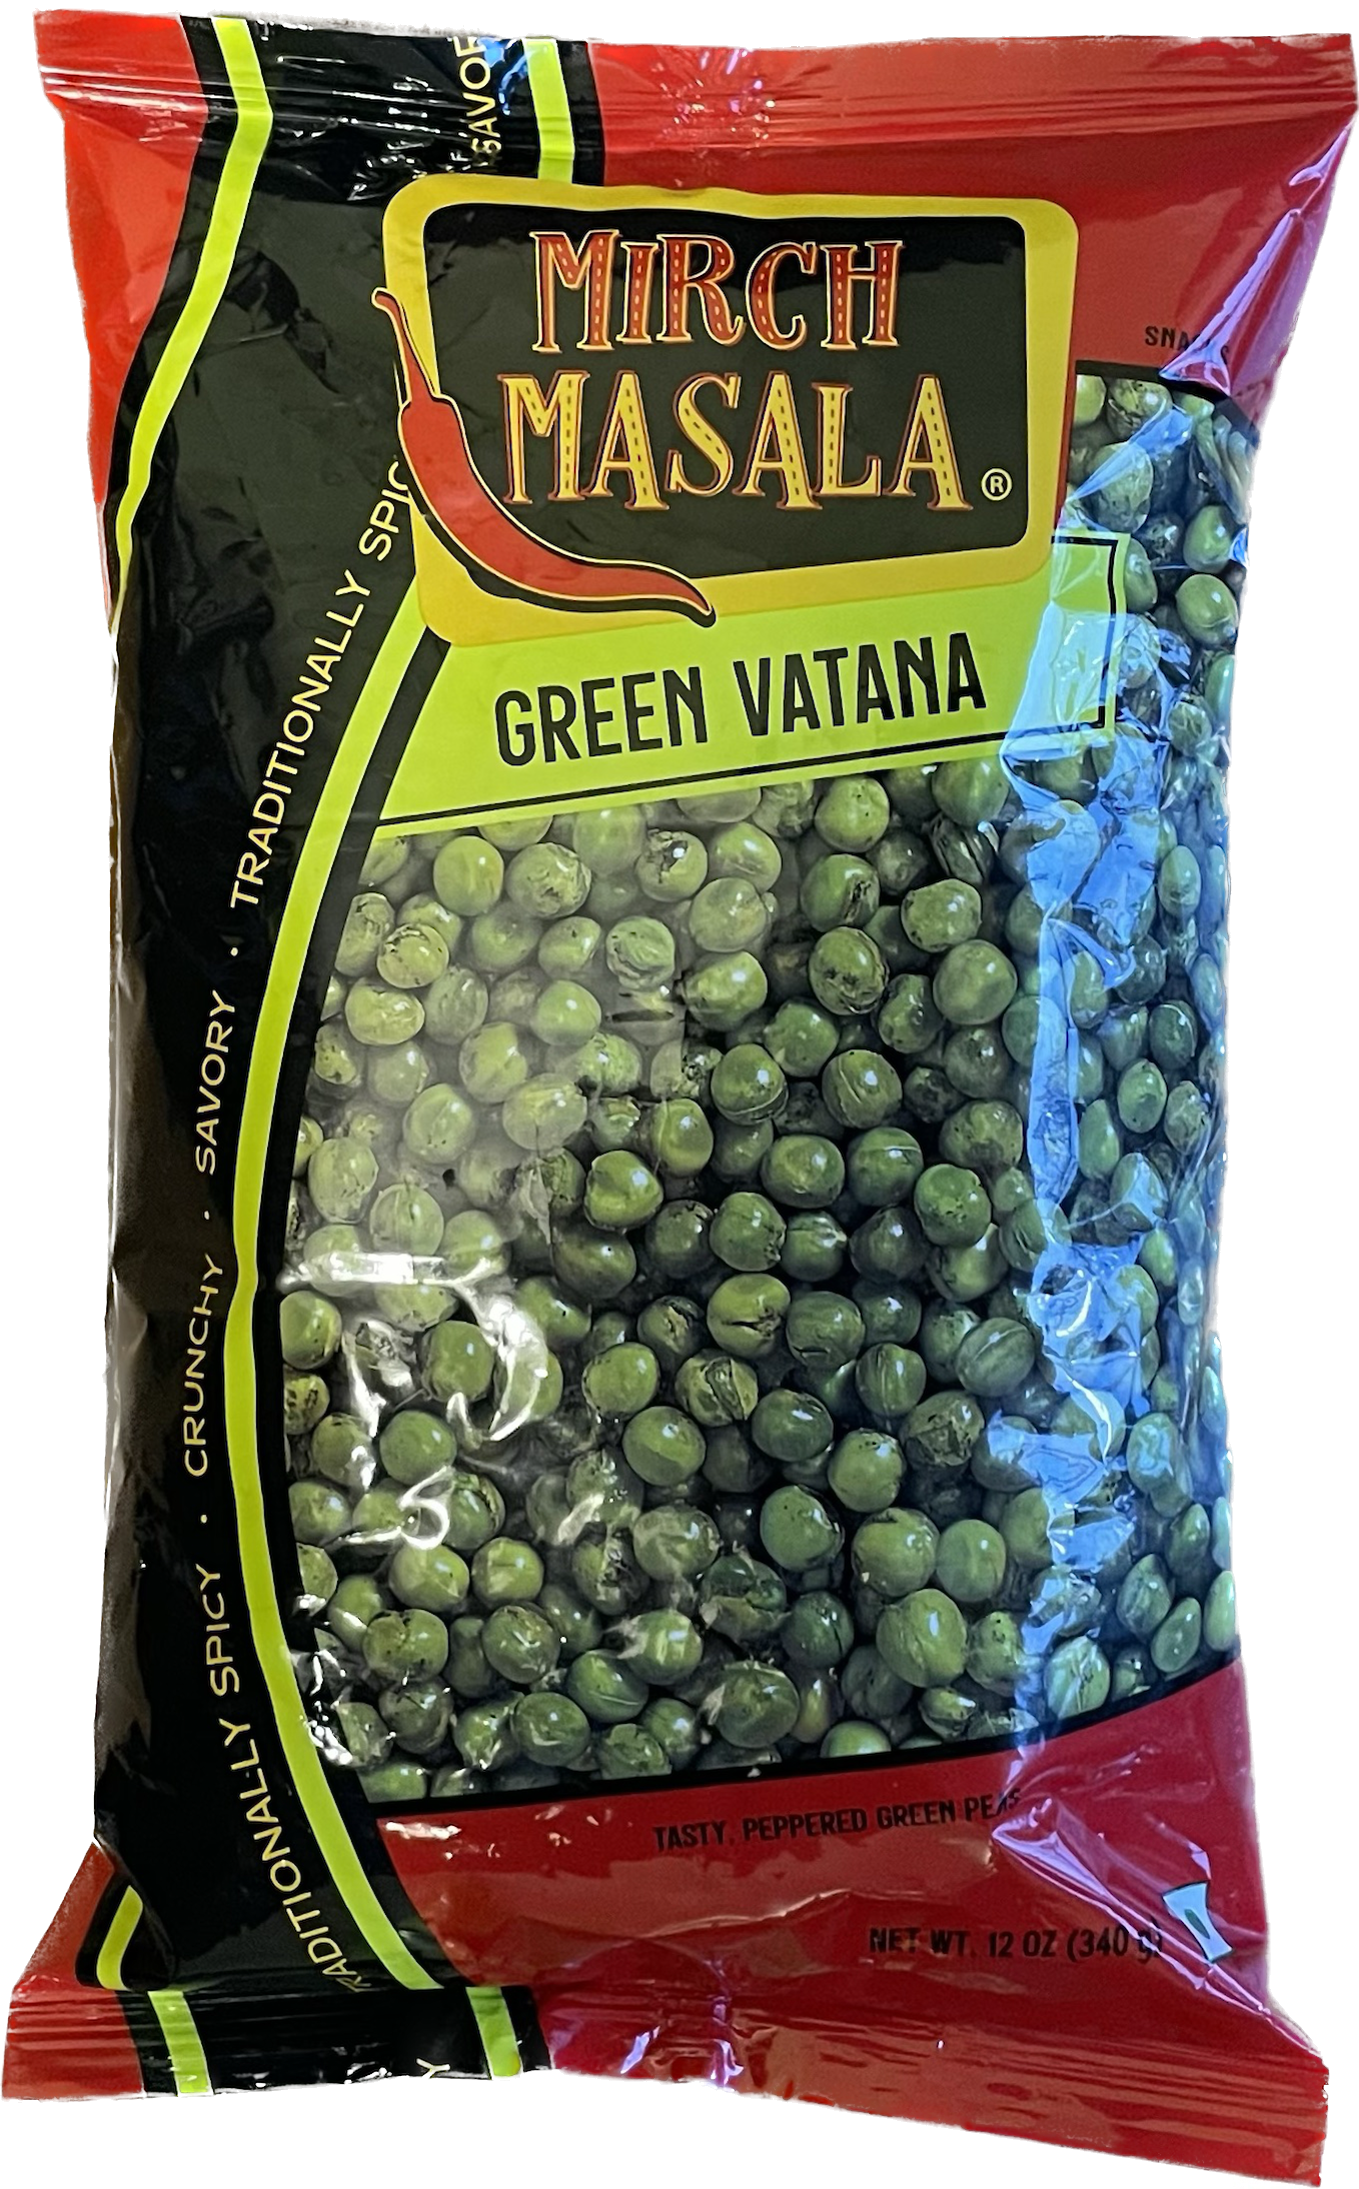 Mirch Masala Green Vatana, 340 g